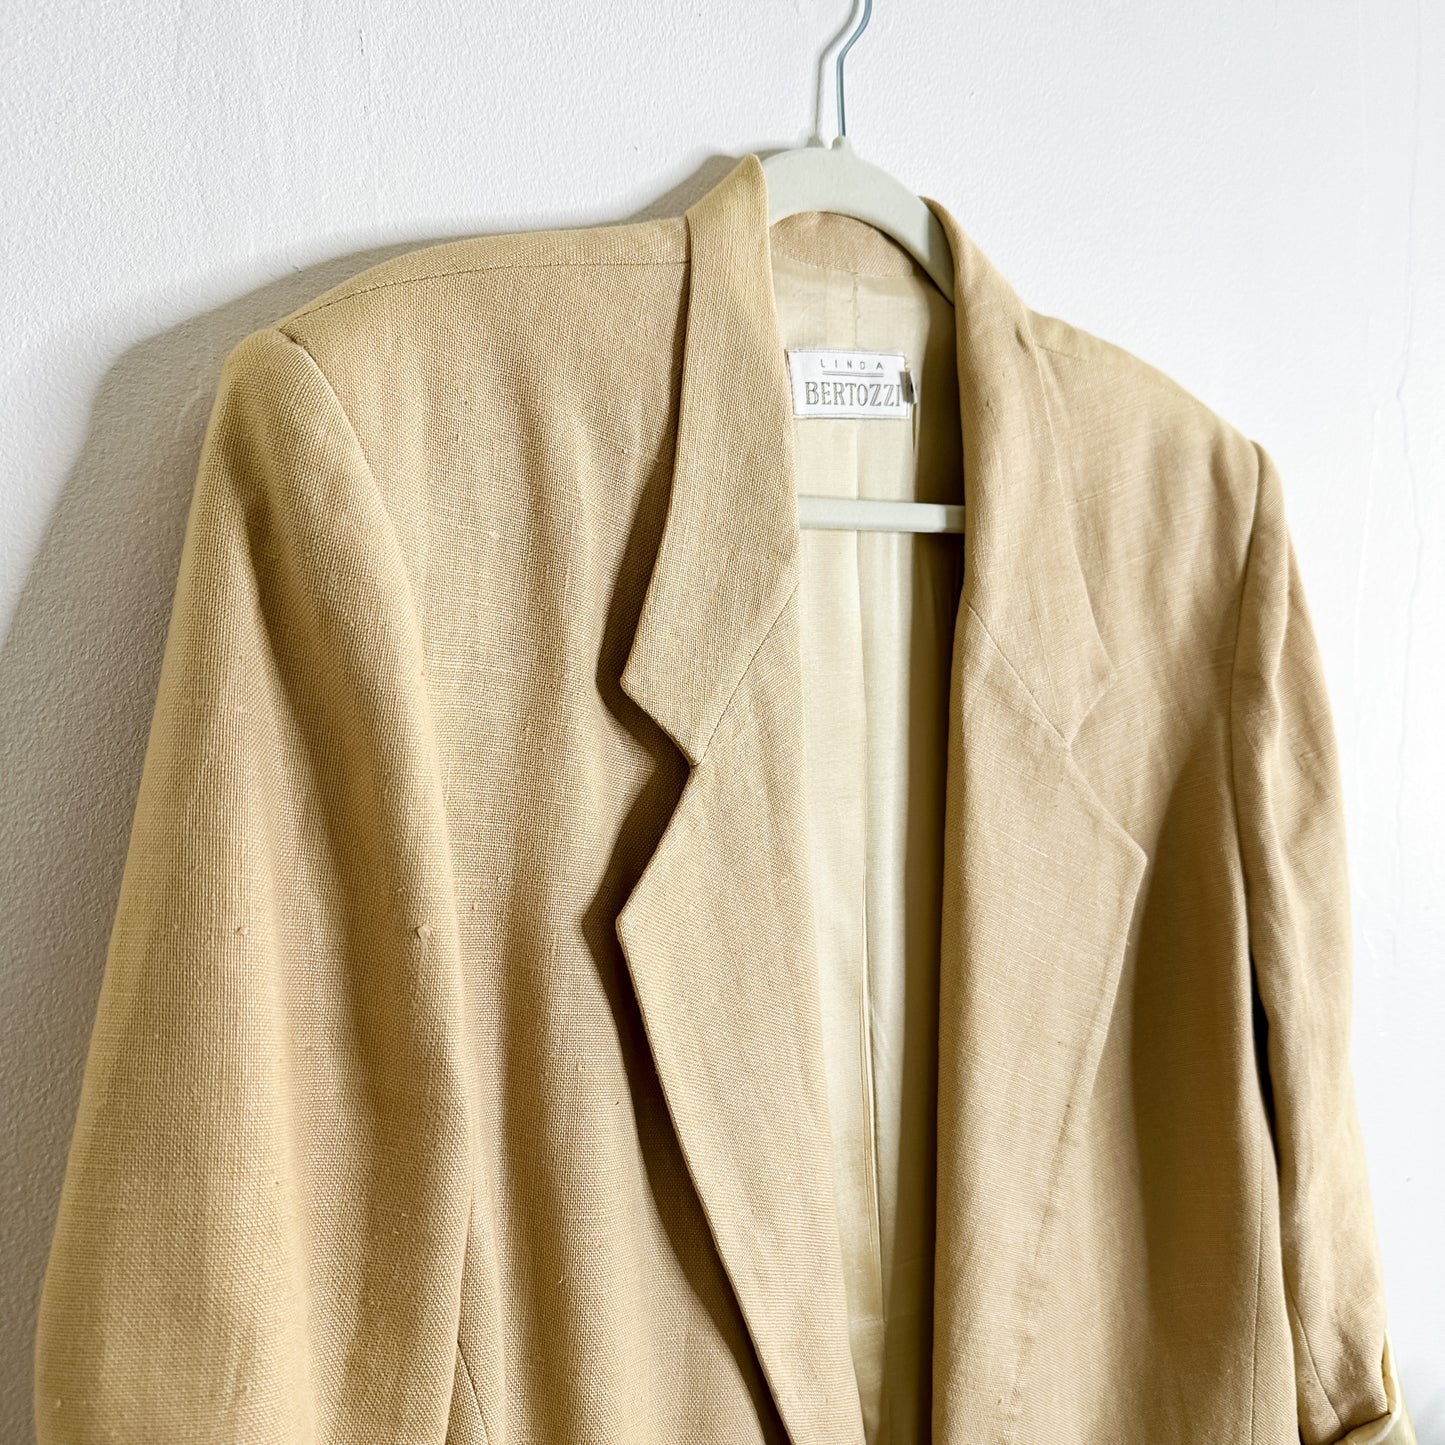 Golden Tan Linen Blazer (fits M-L)